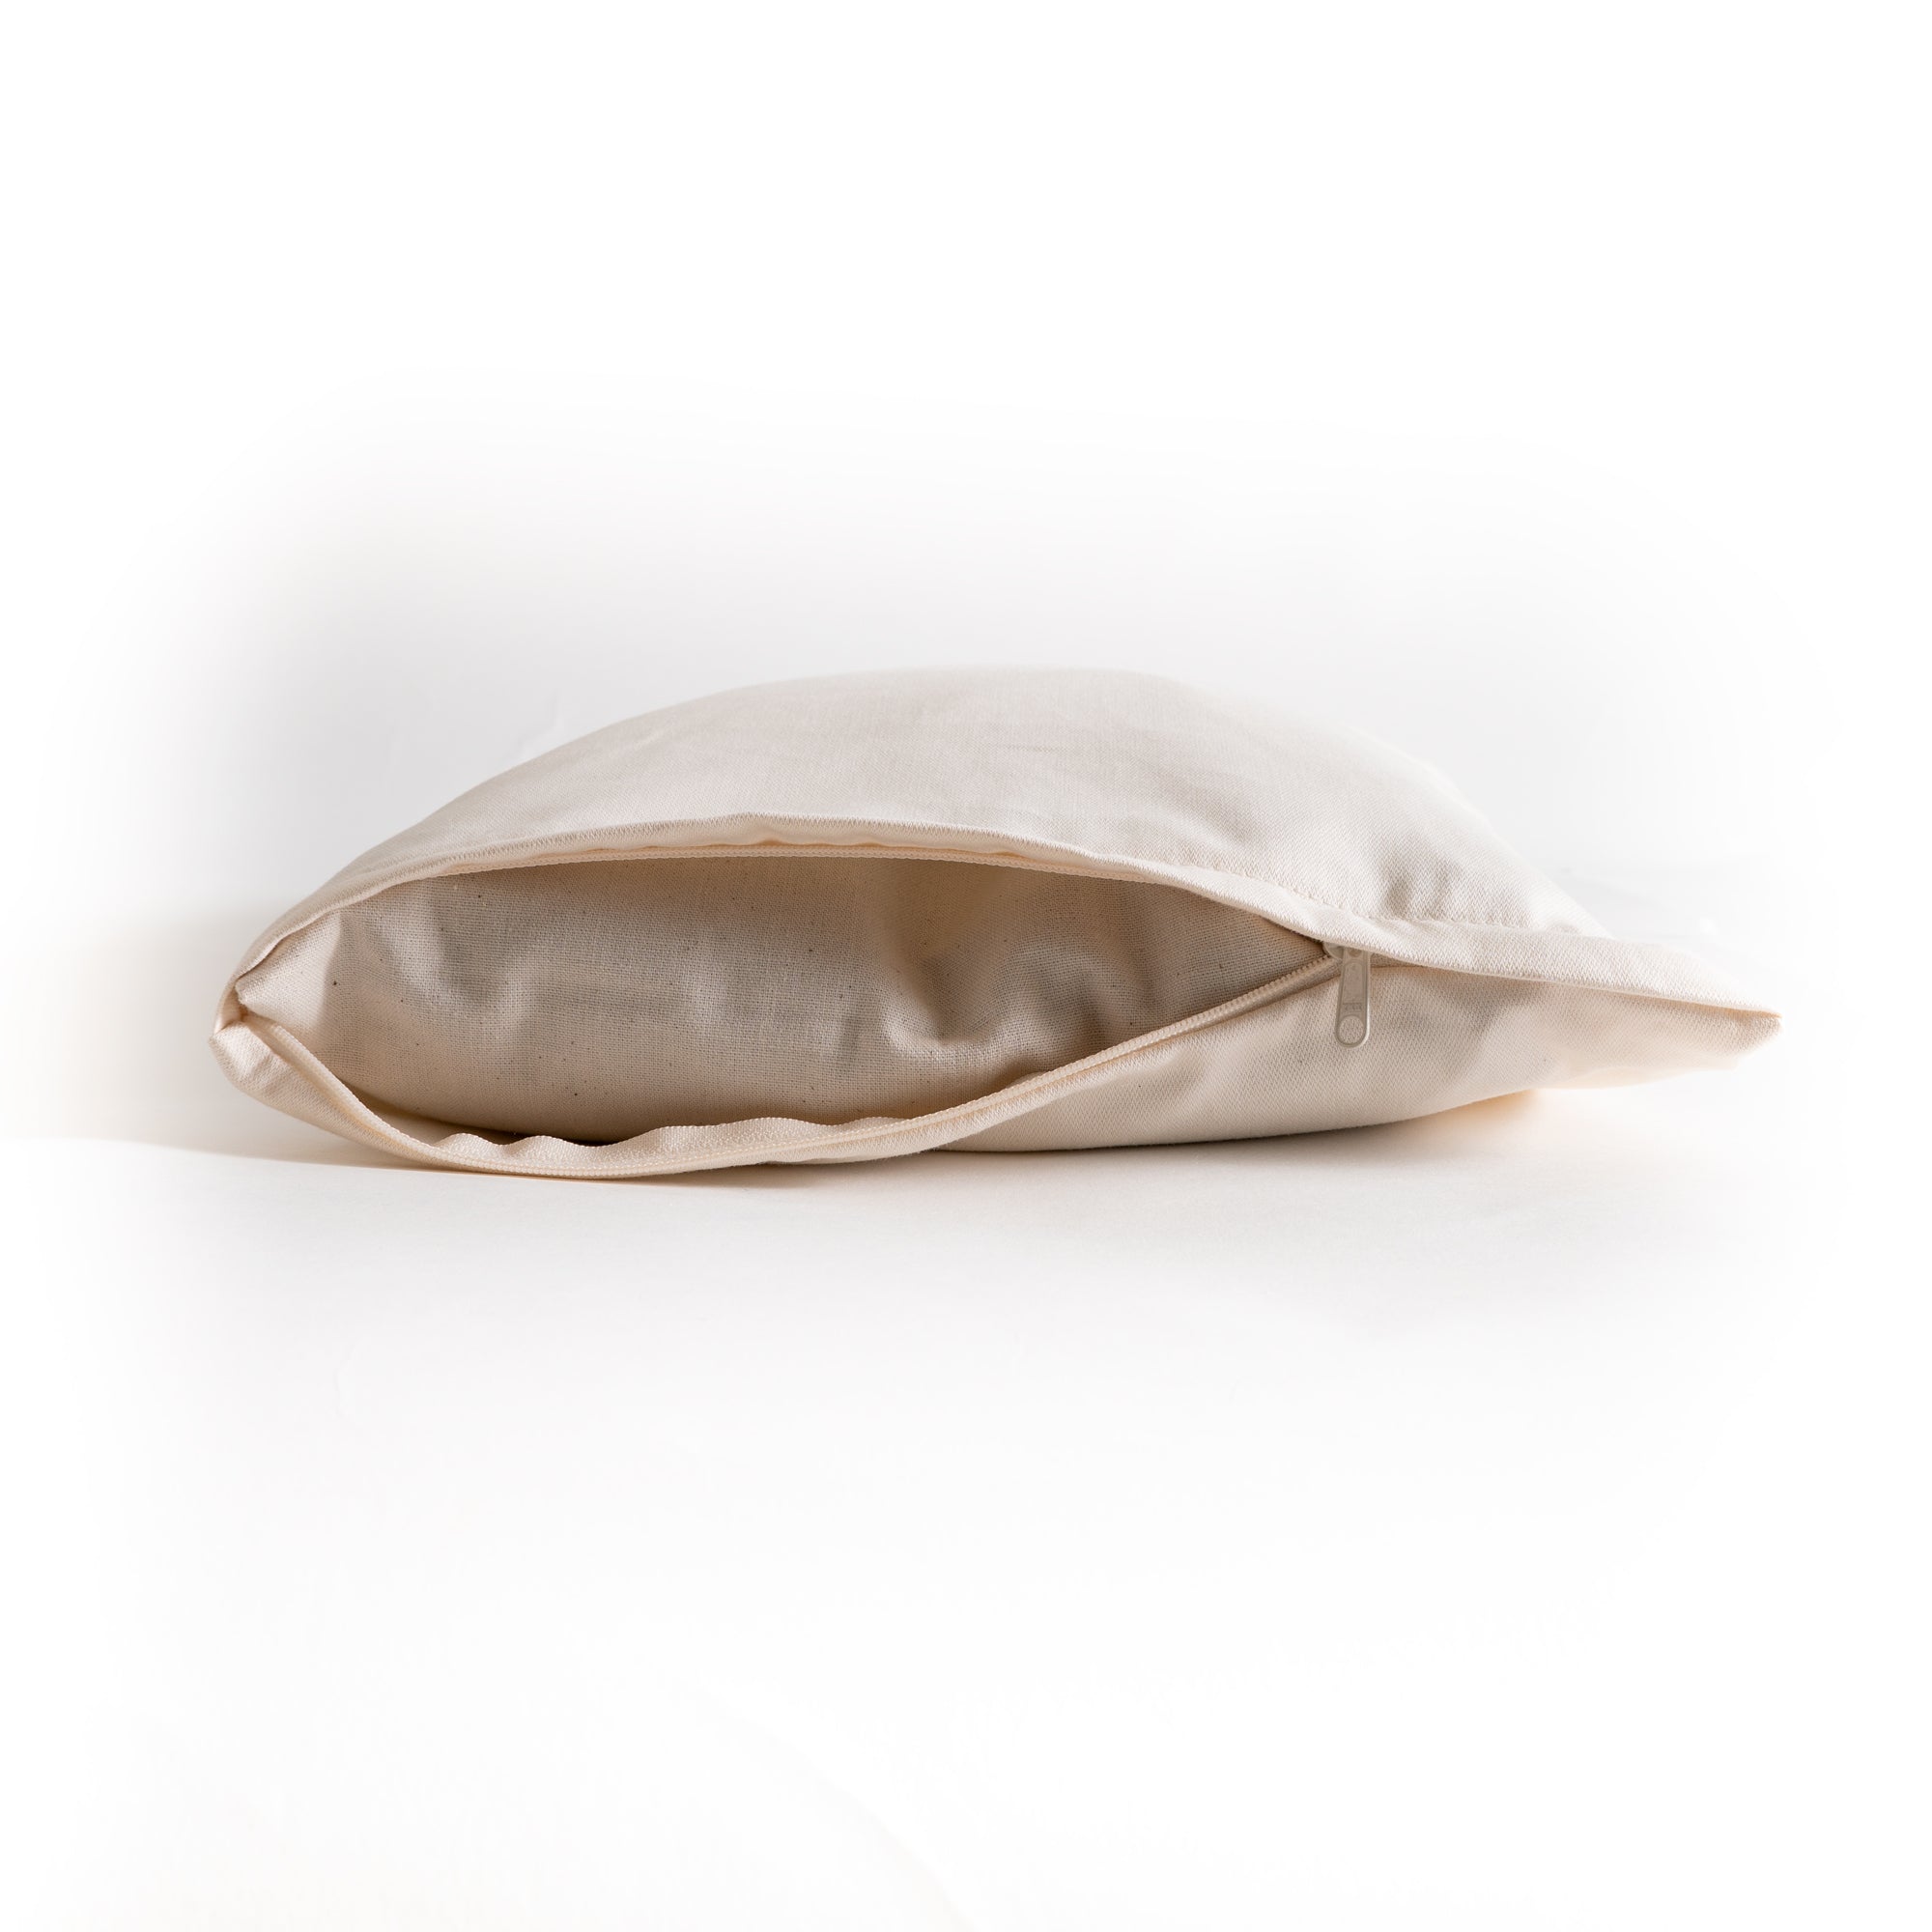 Medium Buckwheat Pillow